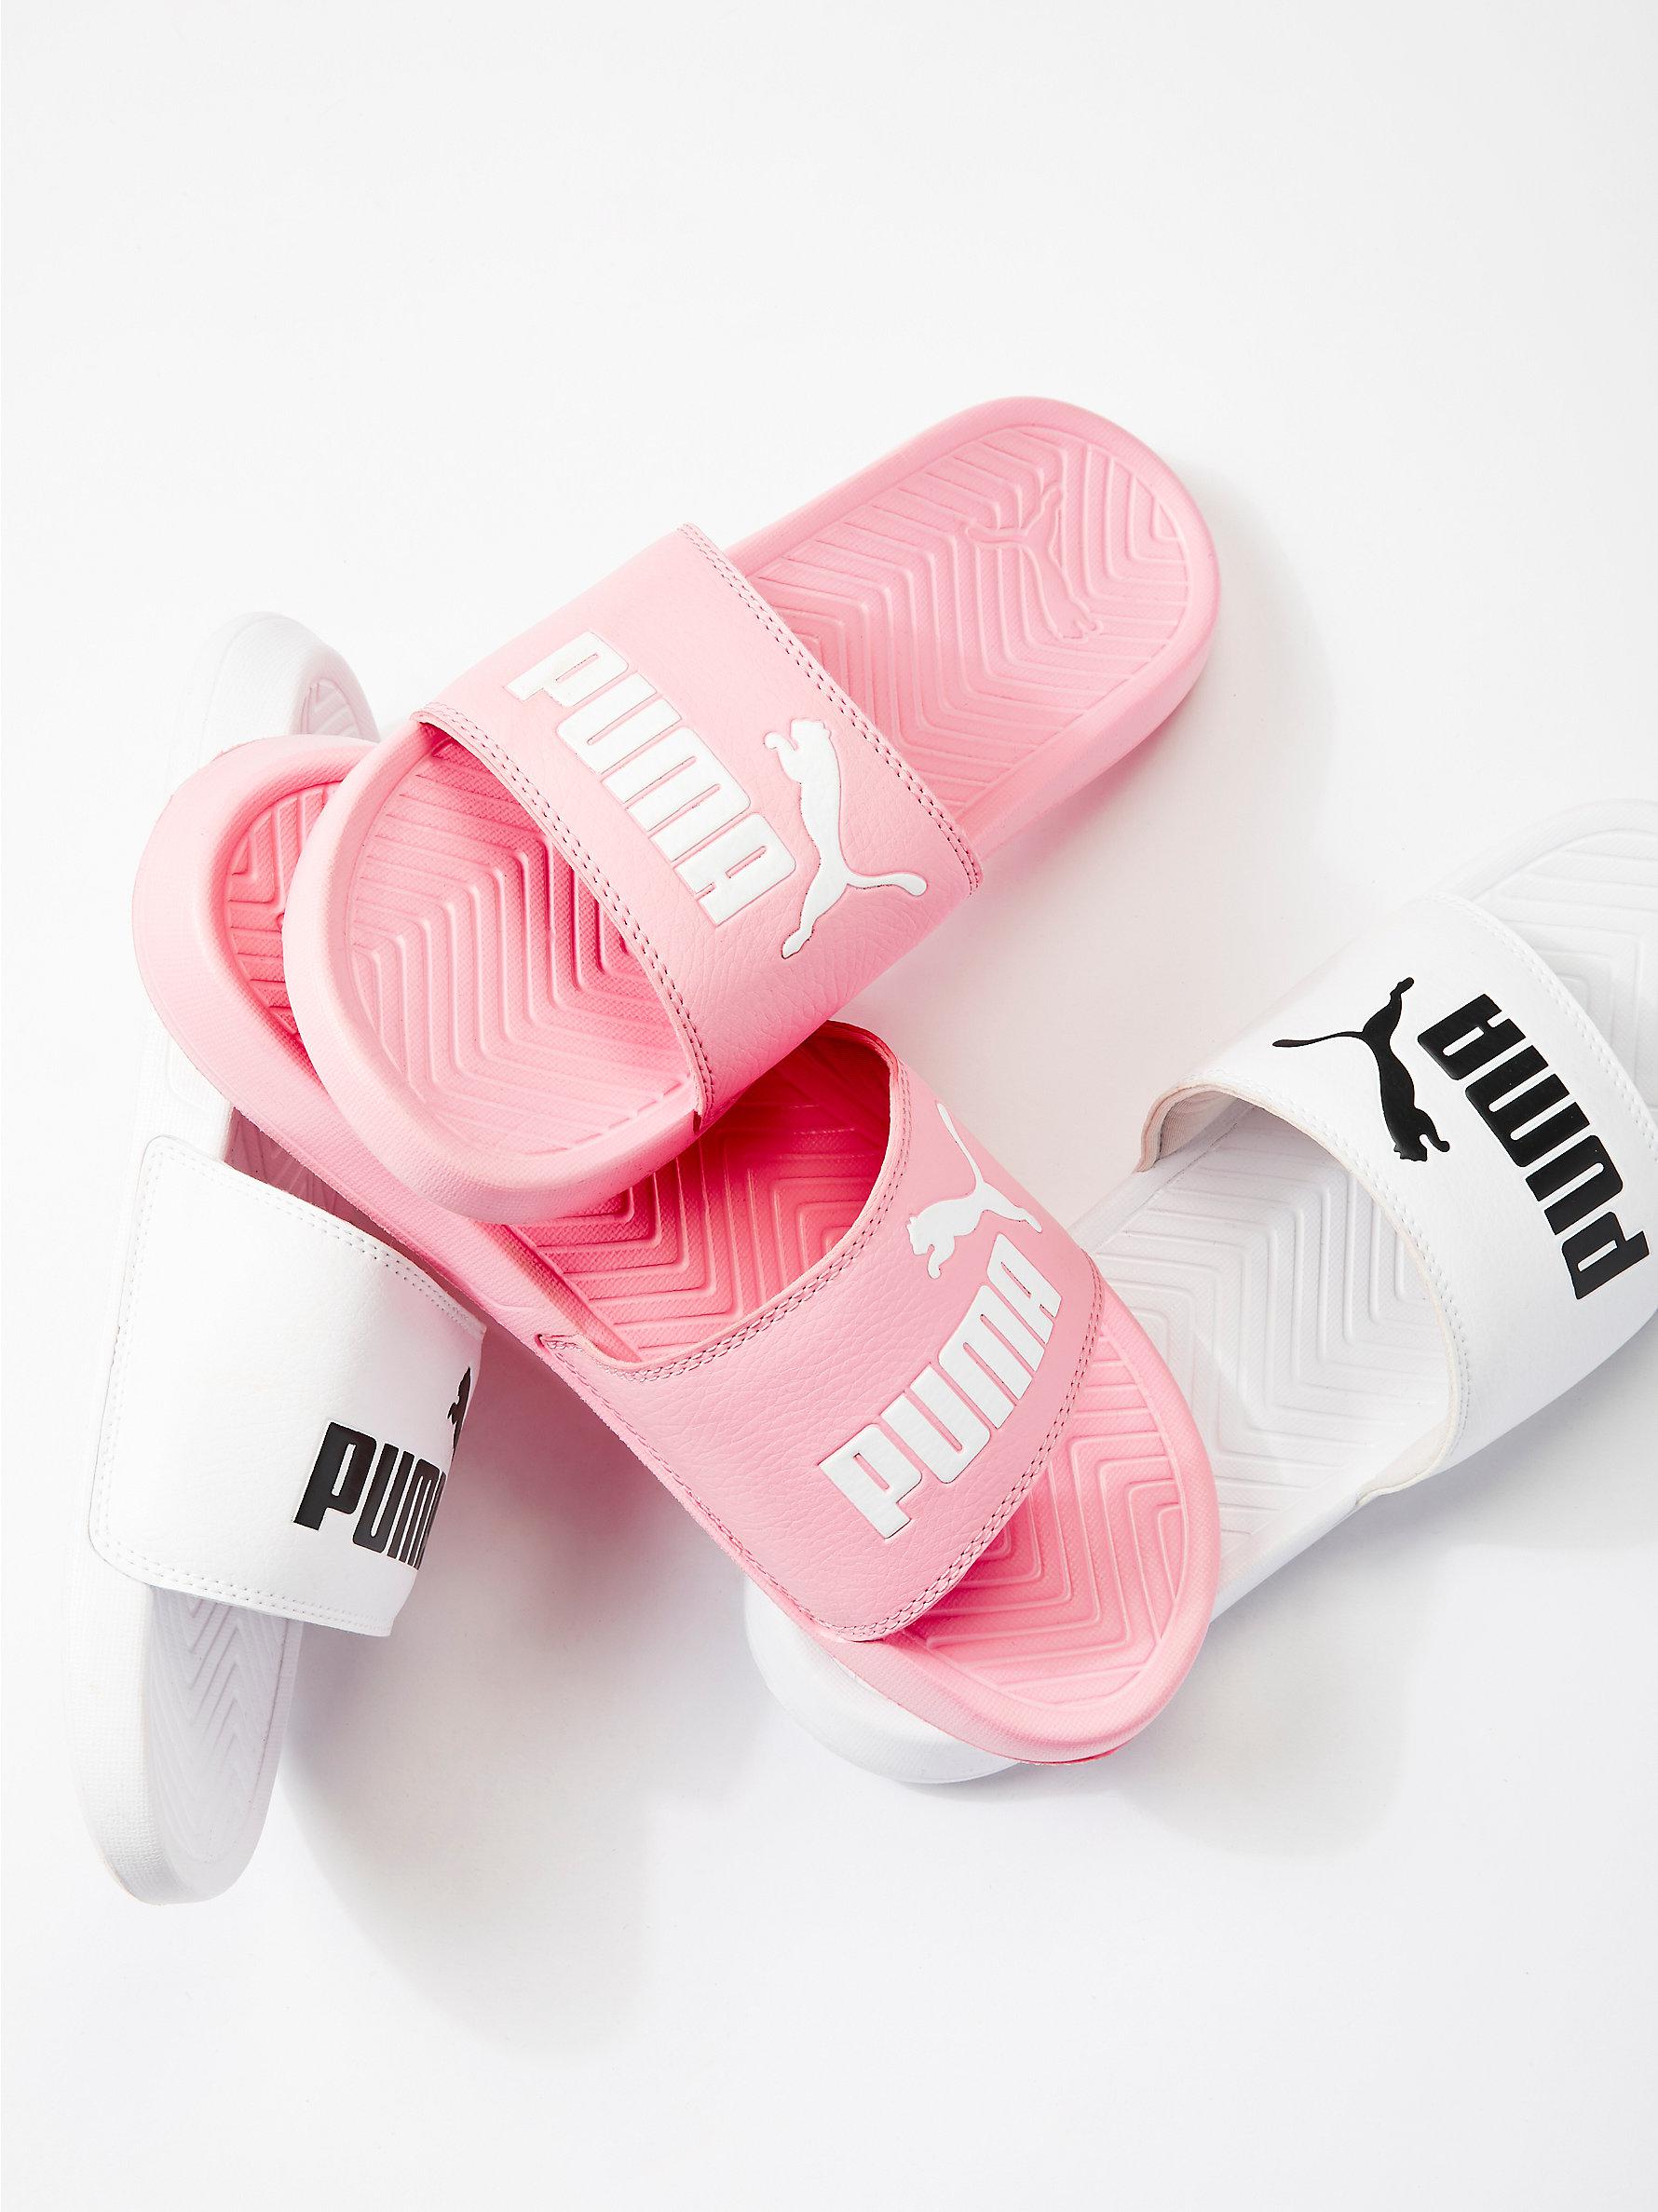 puma sandals pink